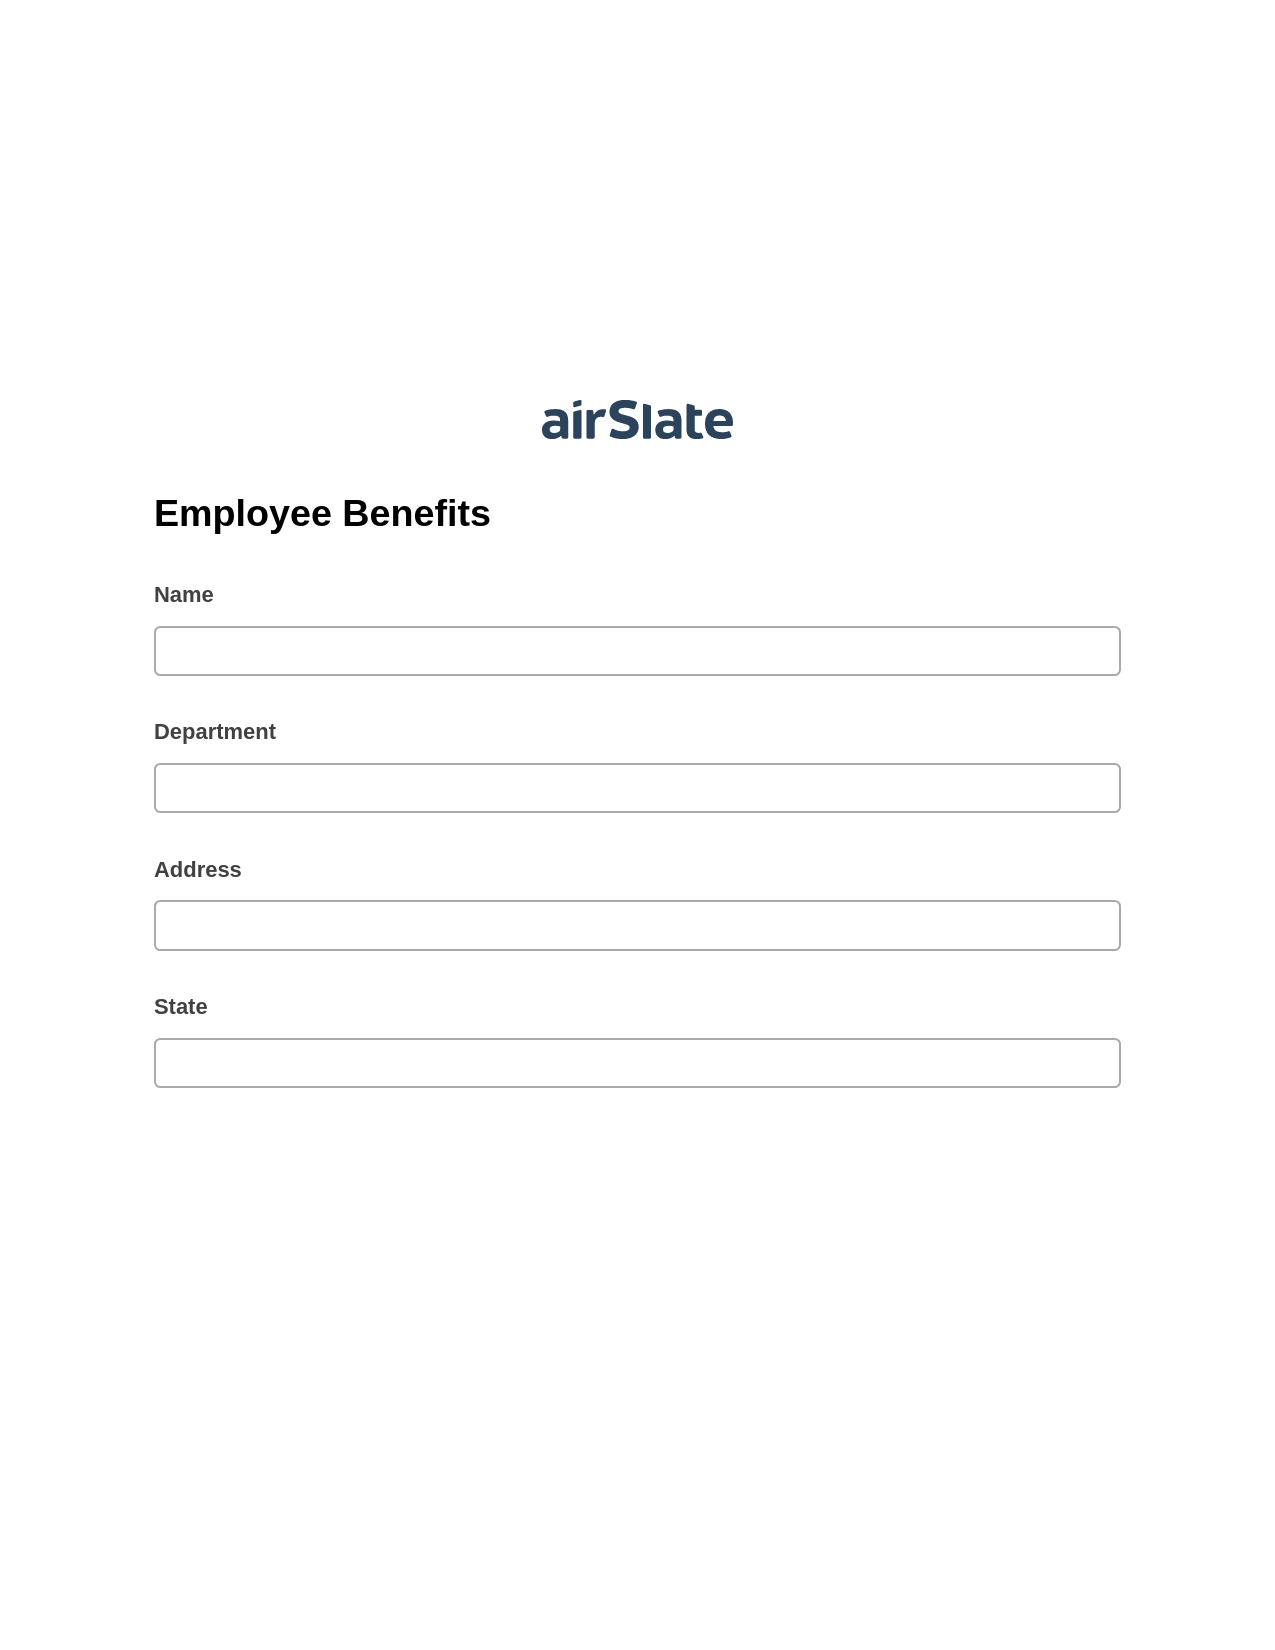 Employee Benefits Pre-fill from CSV File Bot, Google Cloud Print Bot, Box Bot